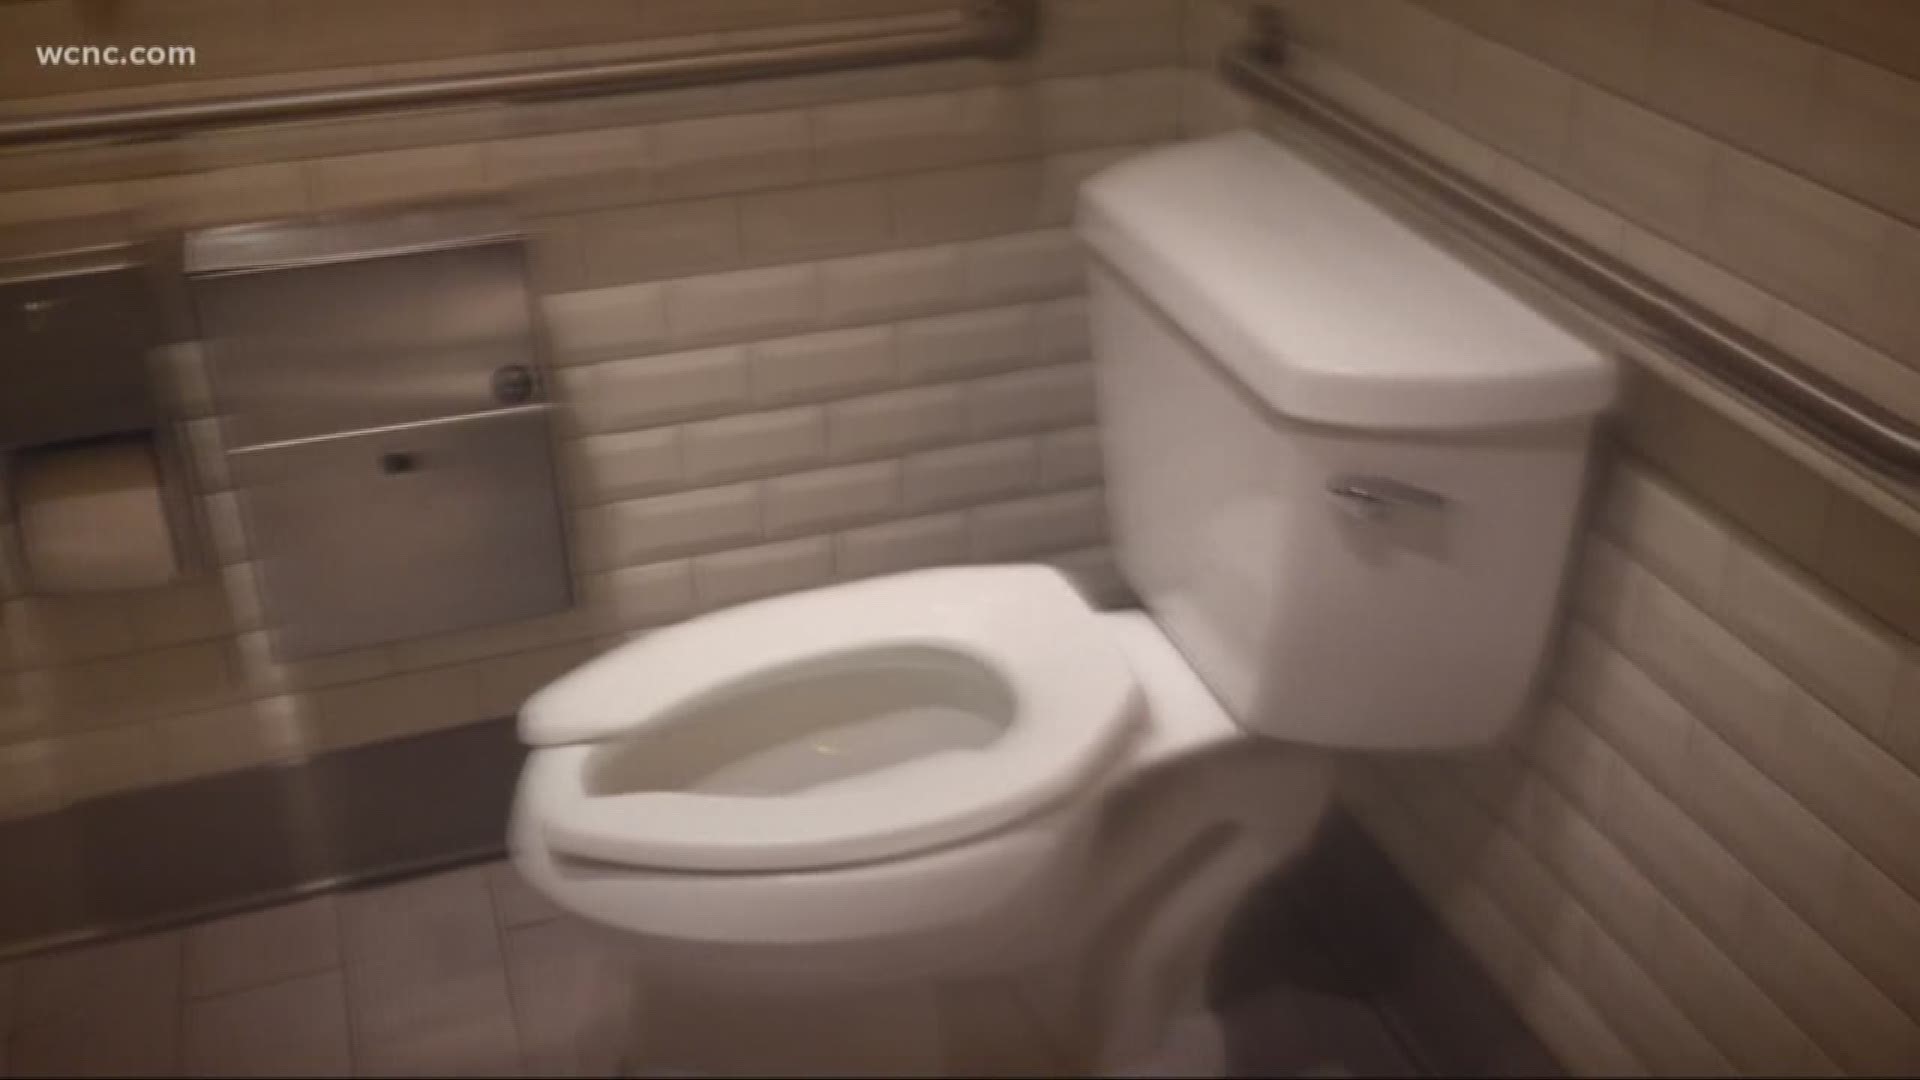 Spy cam in public bathroom